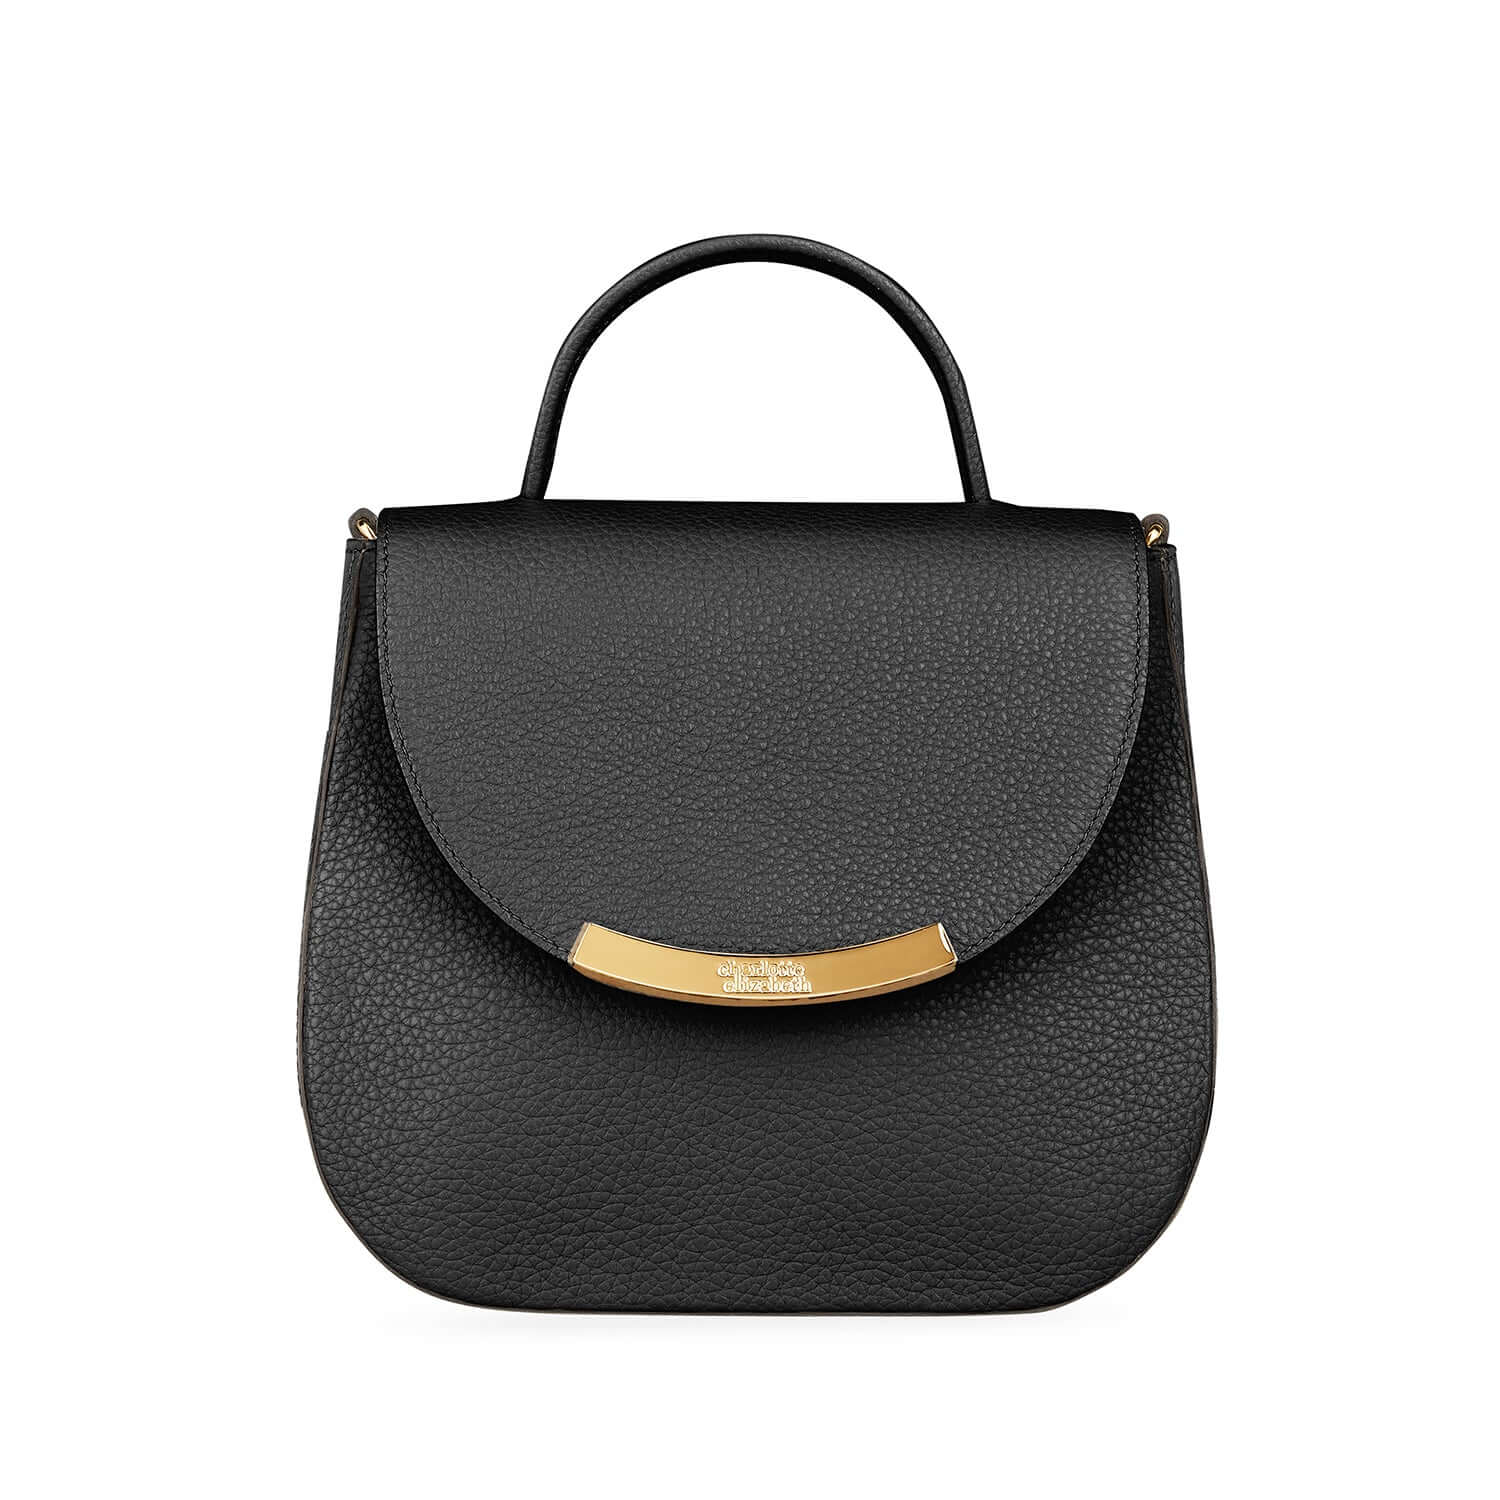 British heritage leather craftsmanship handbag in black, small handle top bag